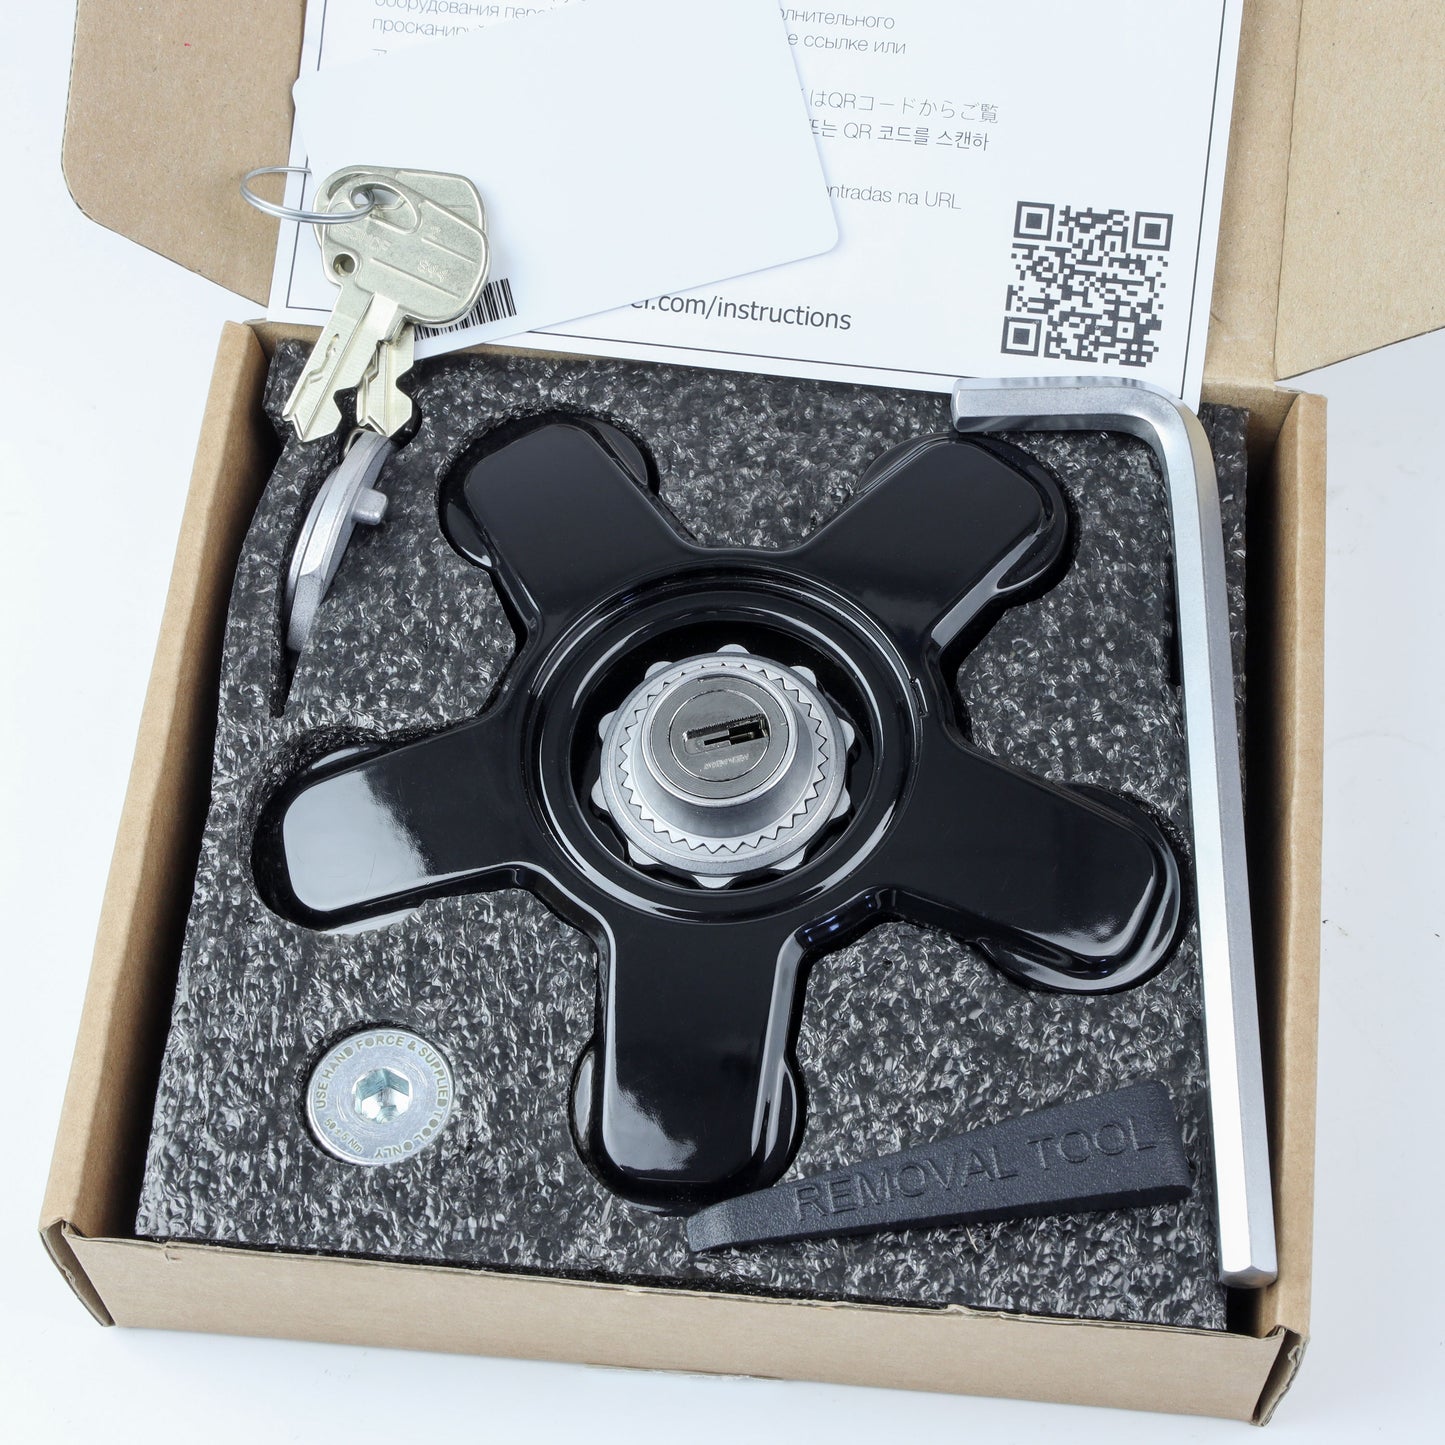 Genuine Spare Wheel Lock Kit for Land Rover Defender L663 - fits 5098 & 6011